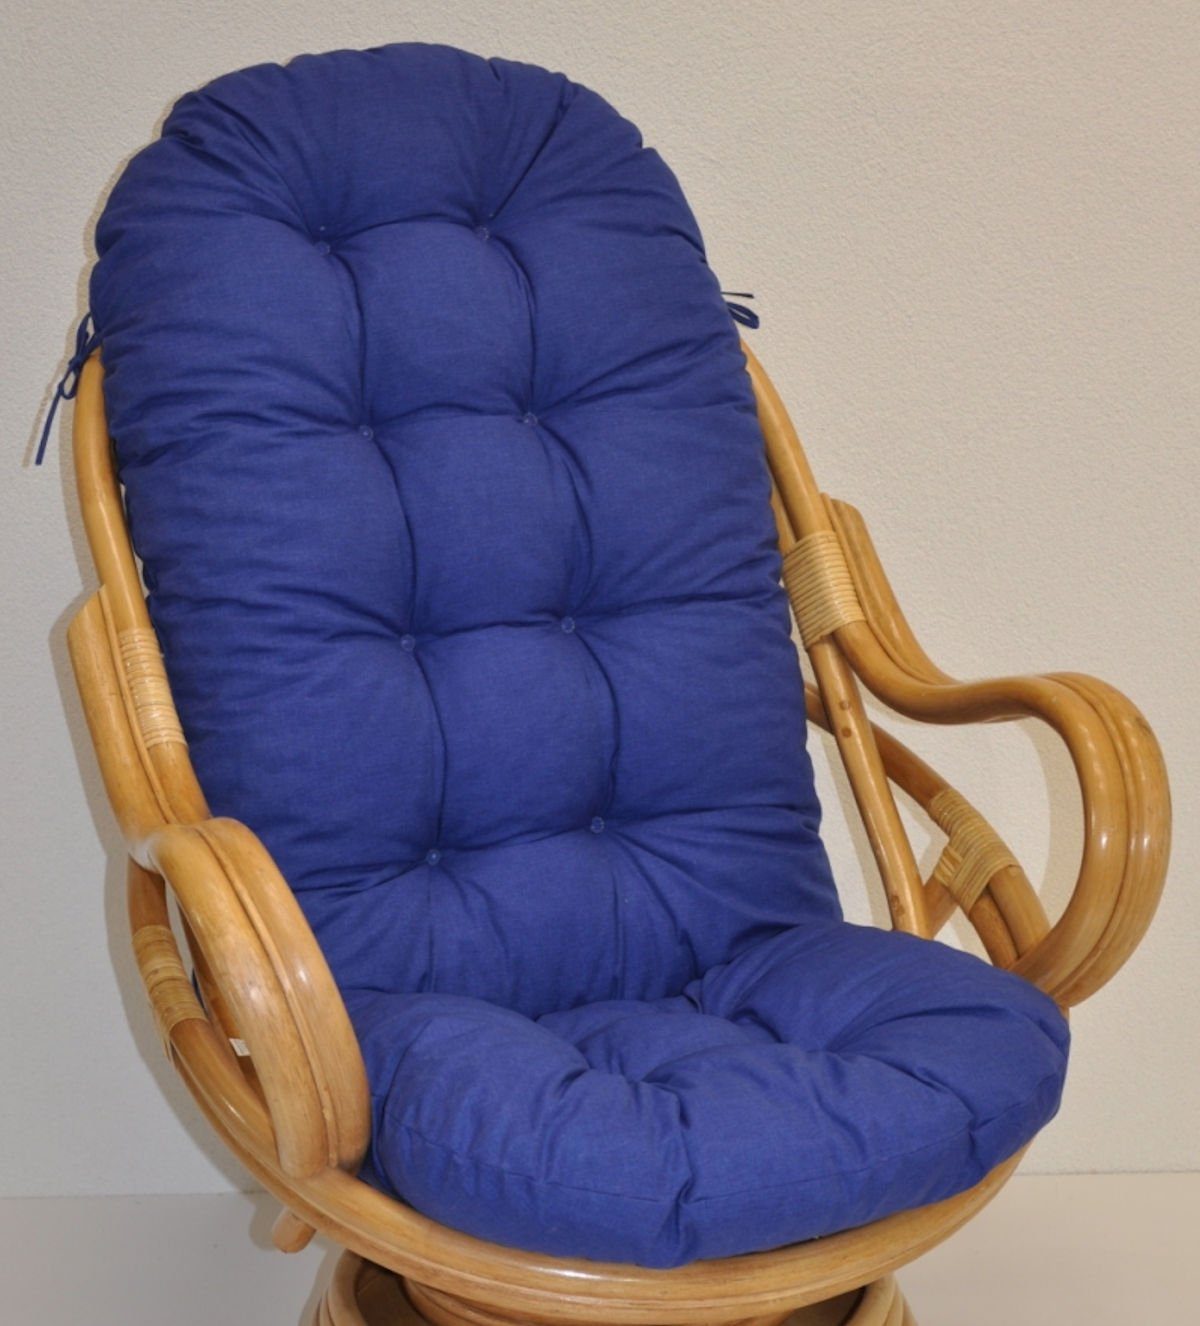 Rattani Sesselauflage Polster für Rattan Schaukelstuhl Drehsessel L 135 cm Color dunkelblau